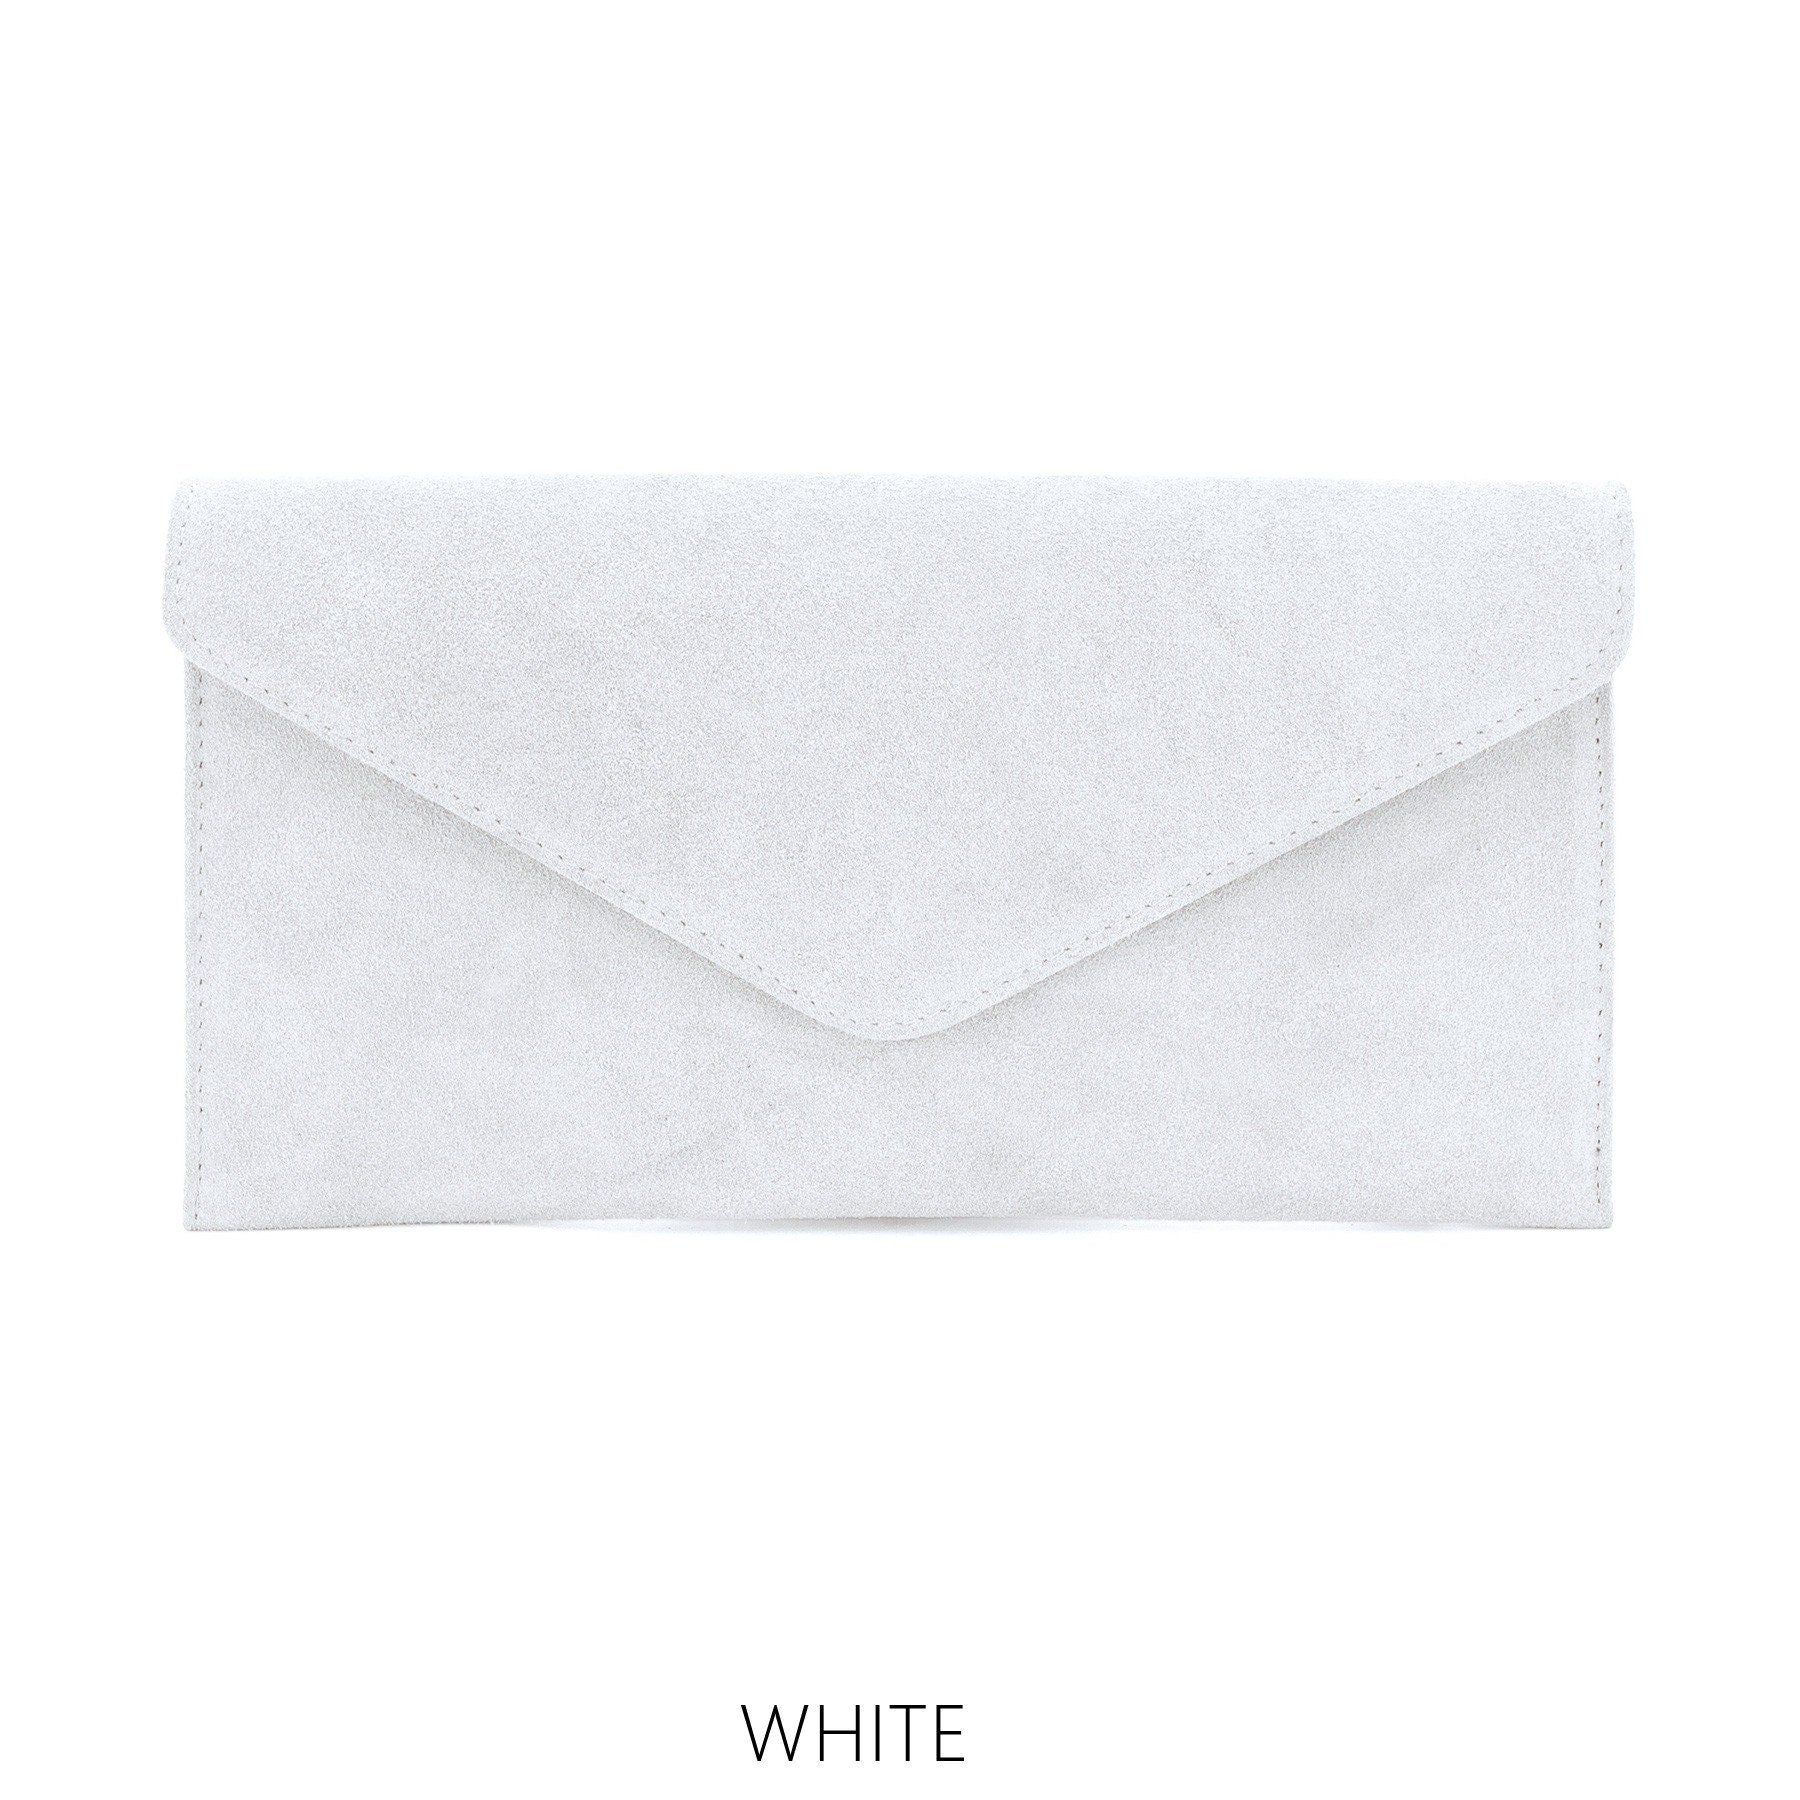 White envelope clutch bag